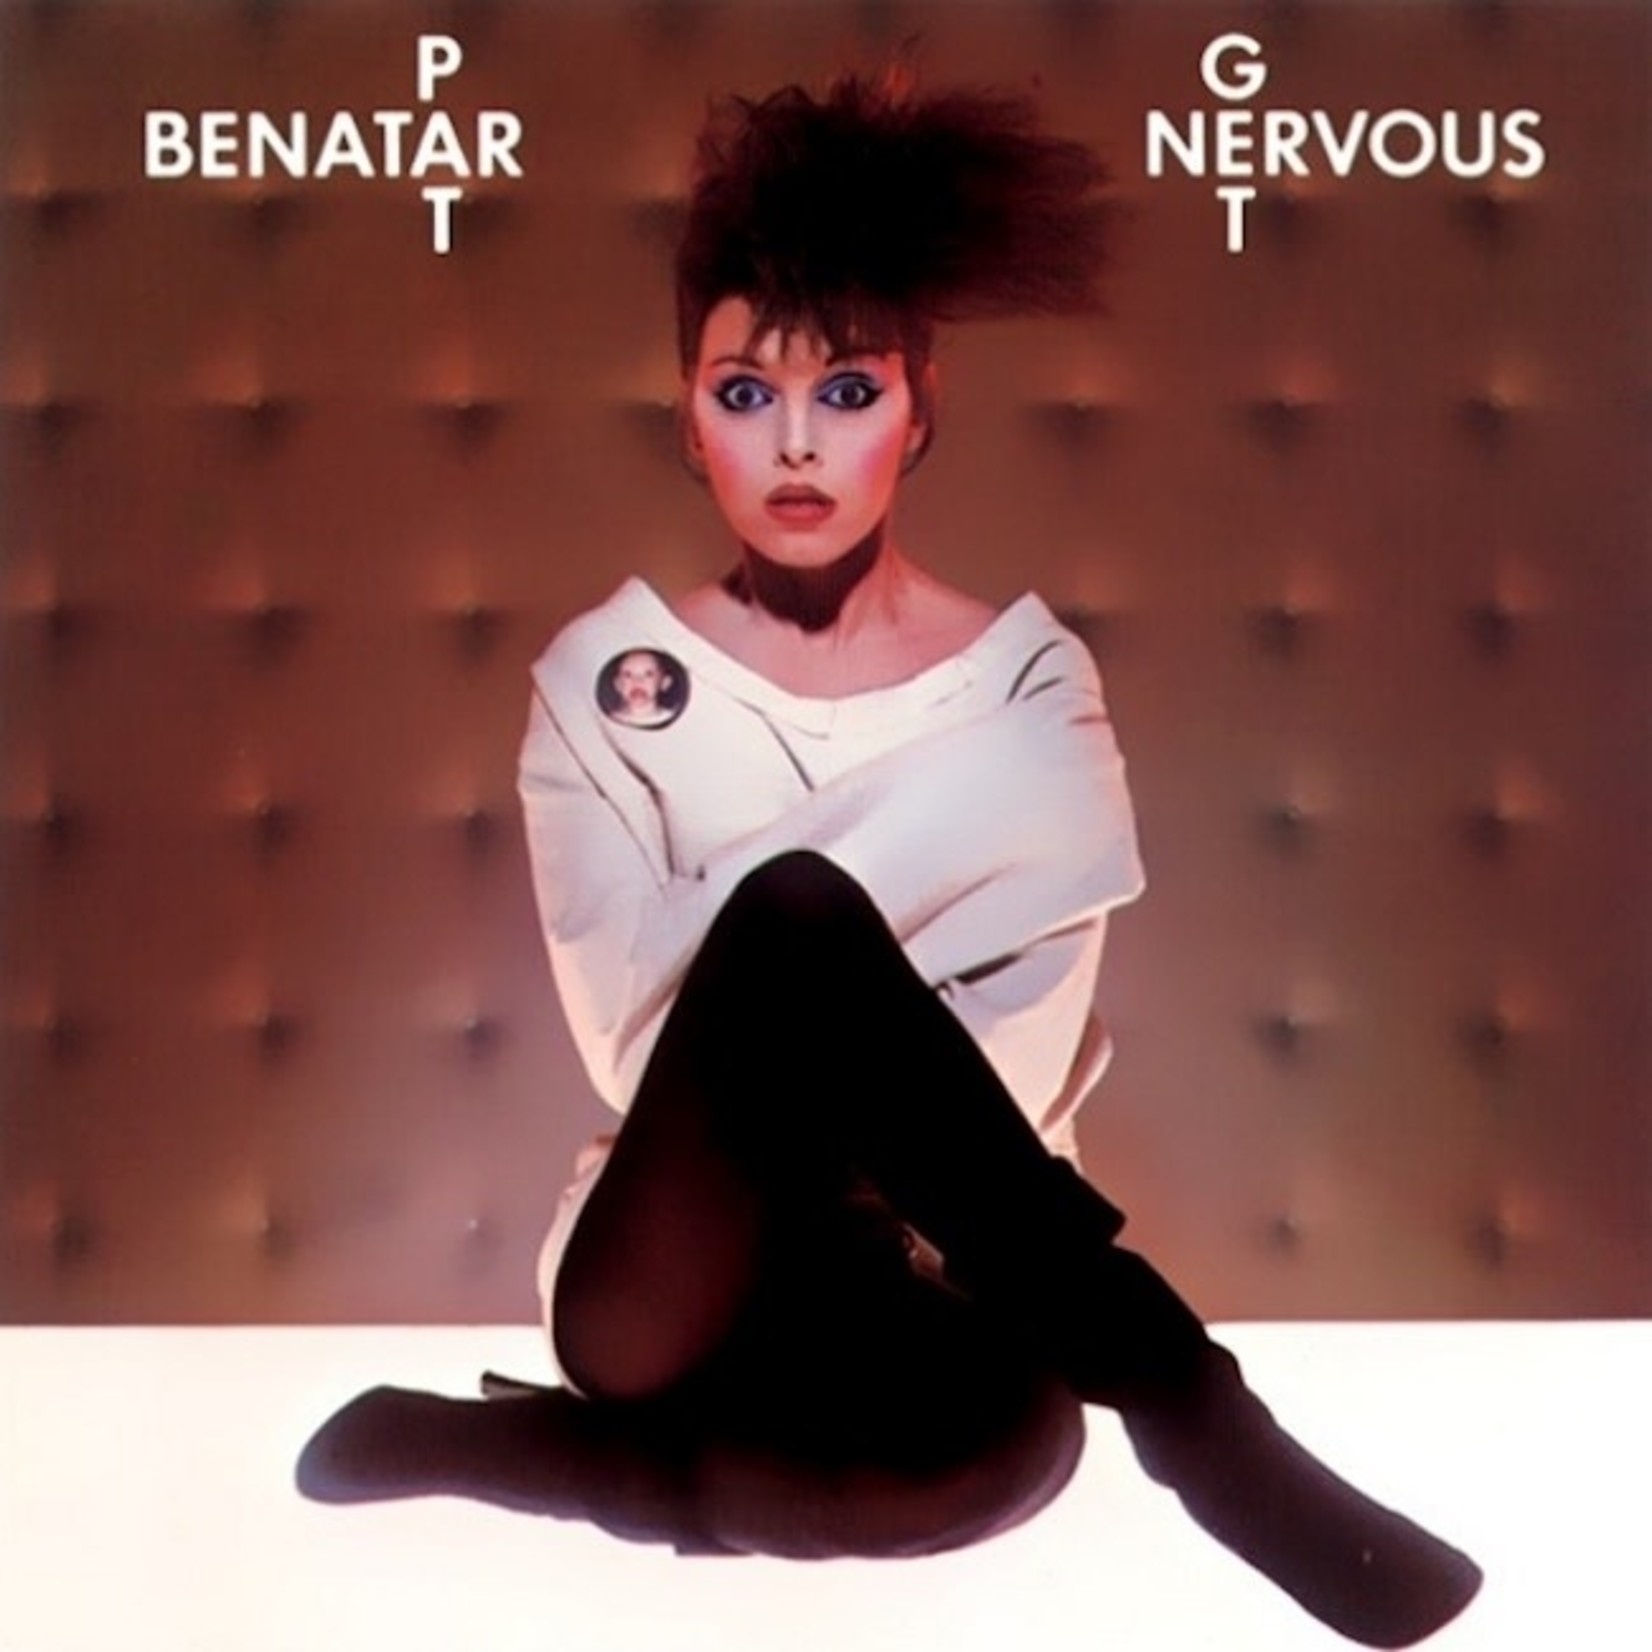 [Vintage] Pat Benatar - Get Nervous